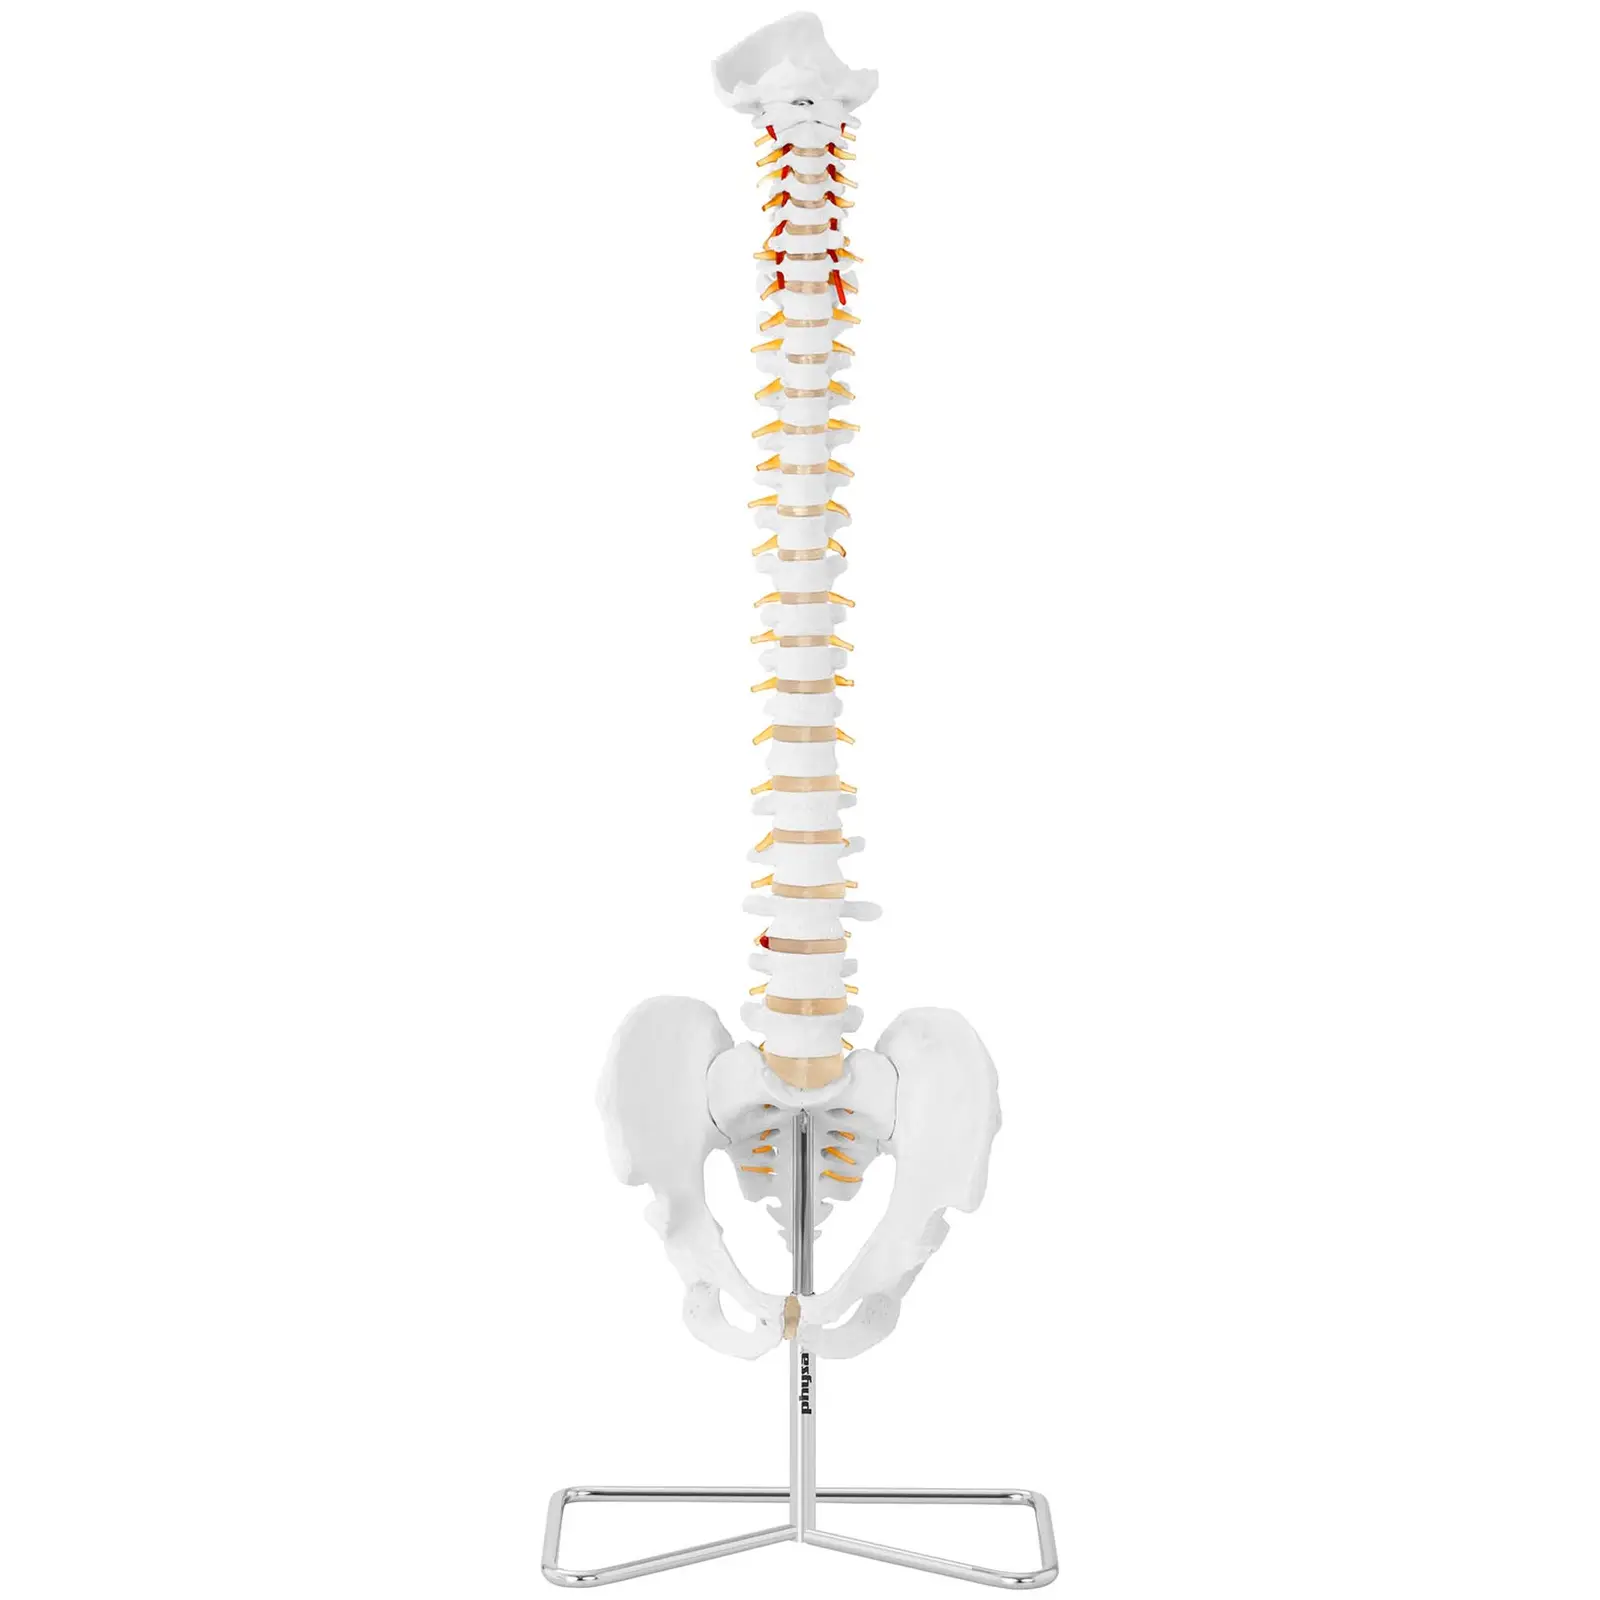 Model Spine with Pelvis - lifesized